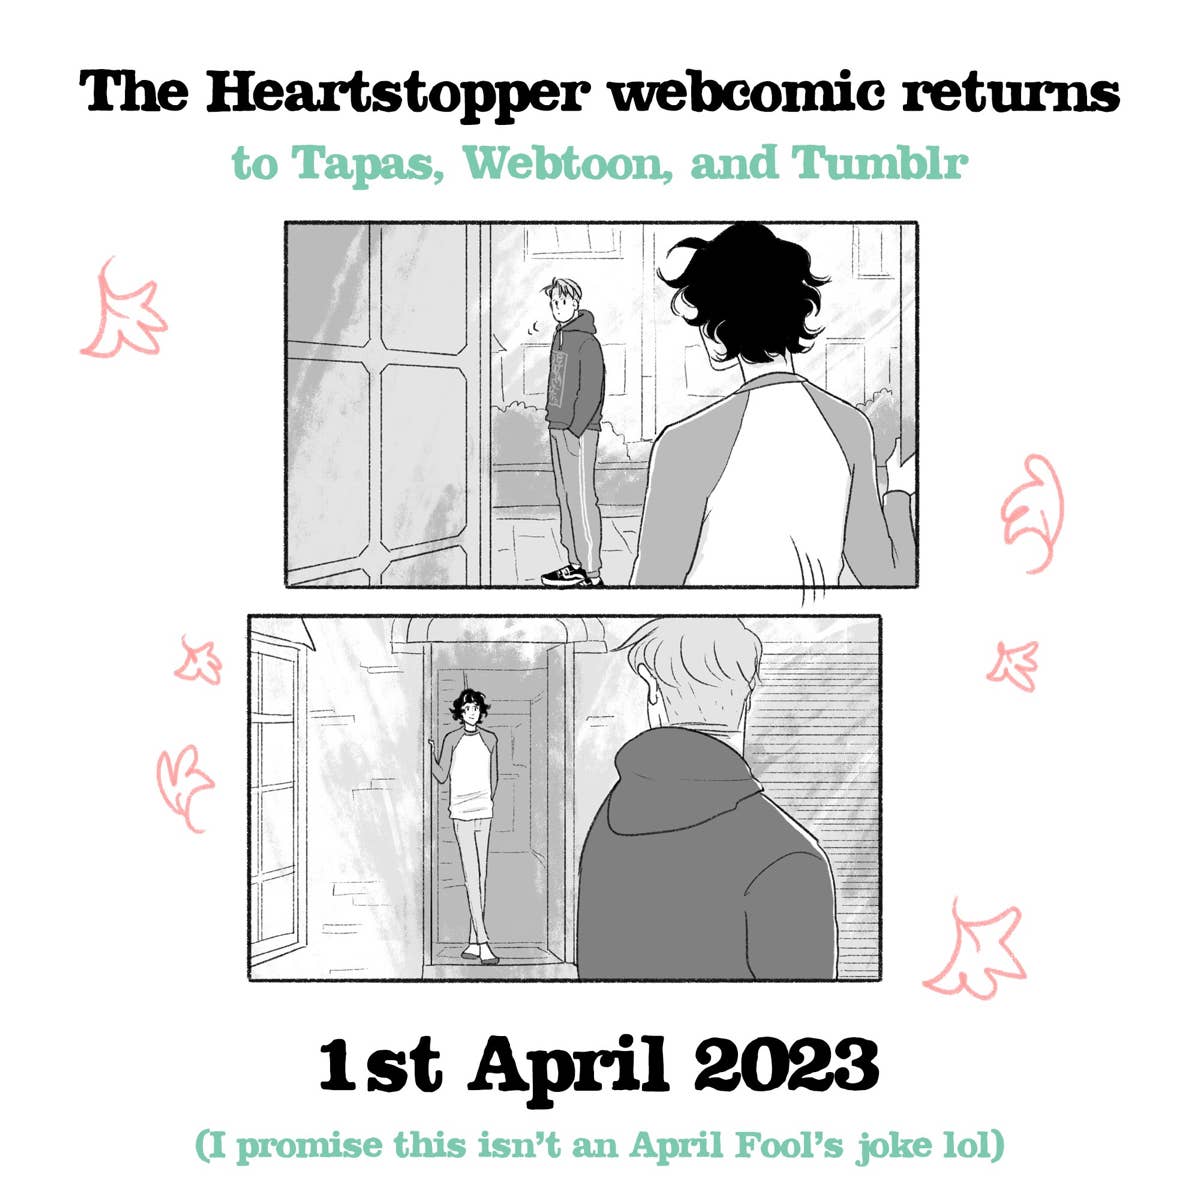 Alice Oseman's Heartstopper webcomic set for an April 1 return (No fooling)